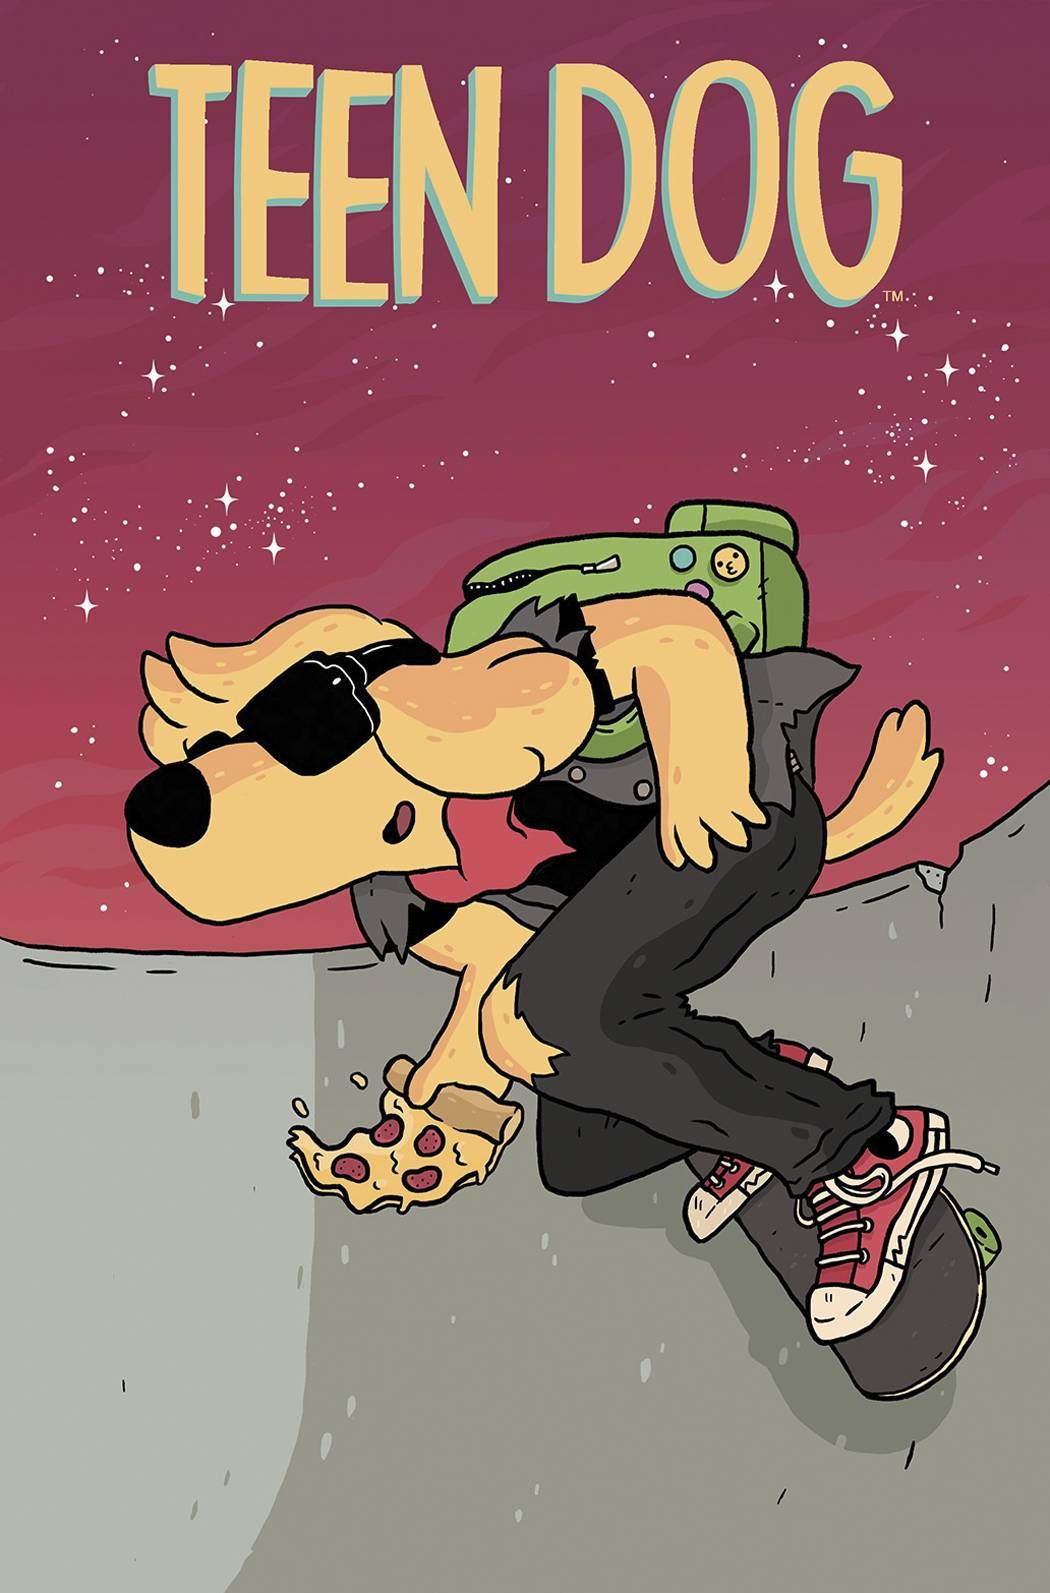 Teen Dog Comic